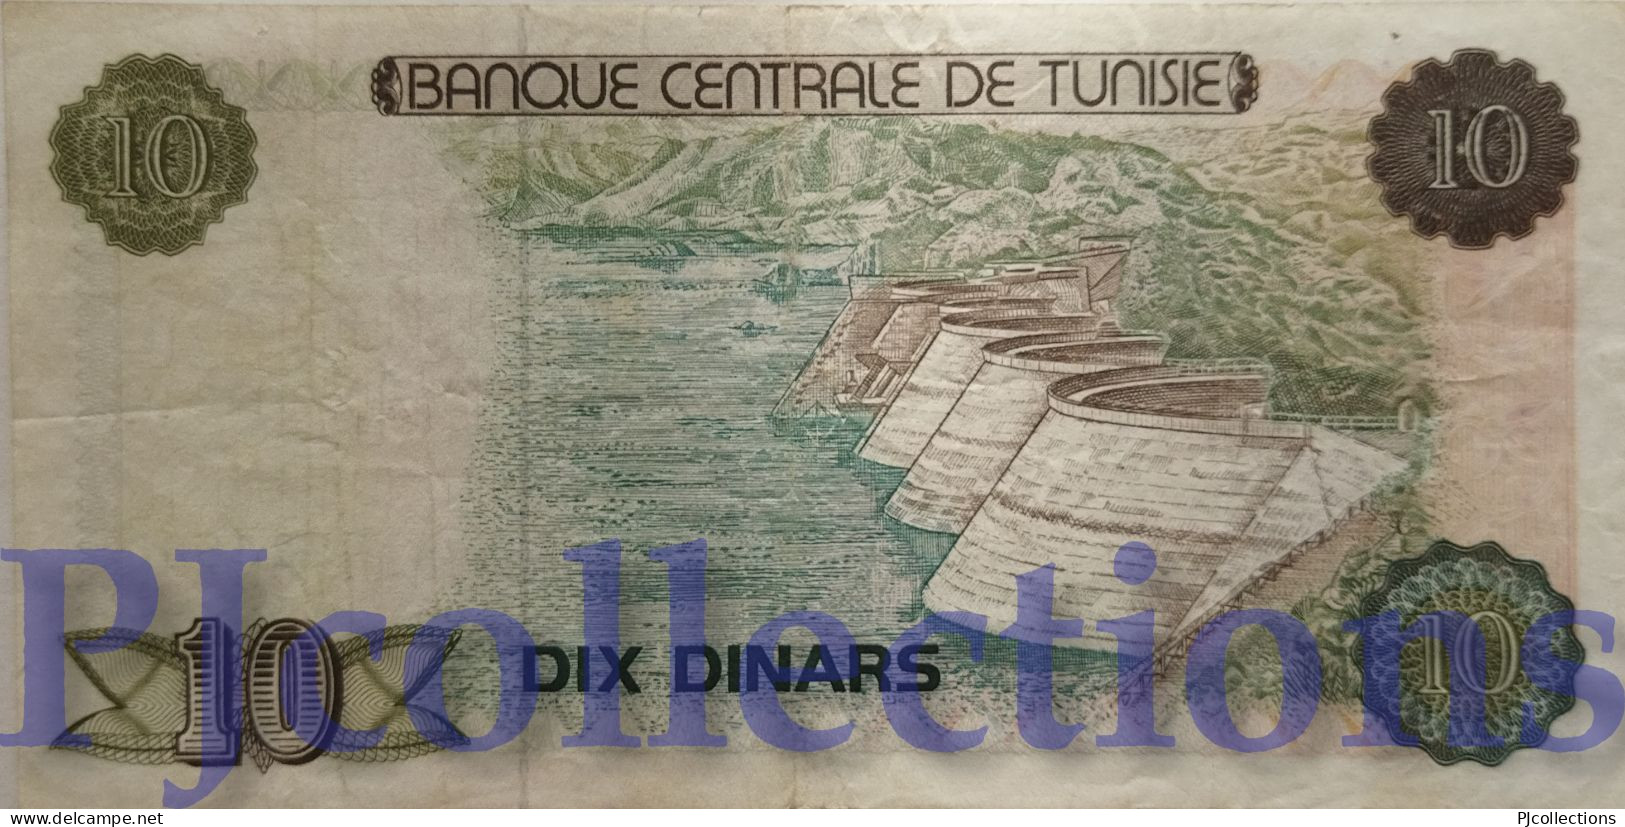 TUNISIA 10 DINARS 1980 PICK 76 XF - Tunisie